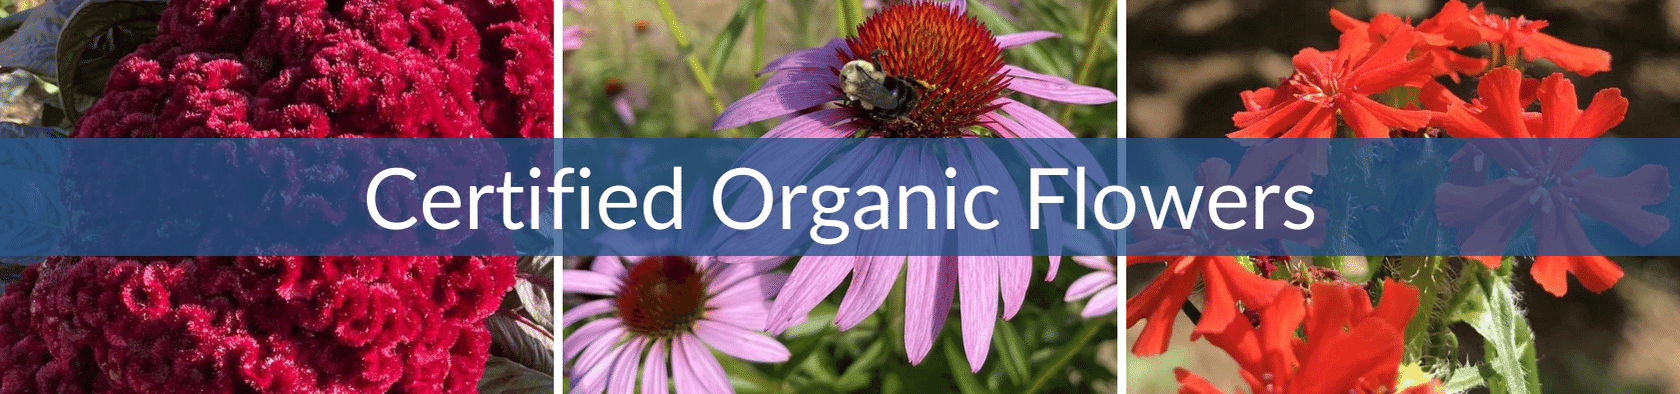 Certified Organic Flowers (1).png__PID:624a94bf-b4ff-4a26-9dfa-b48471954062